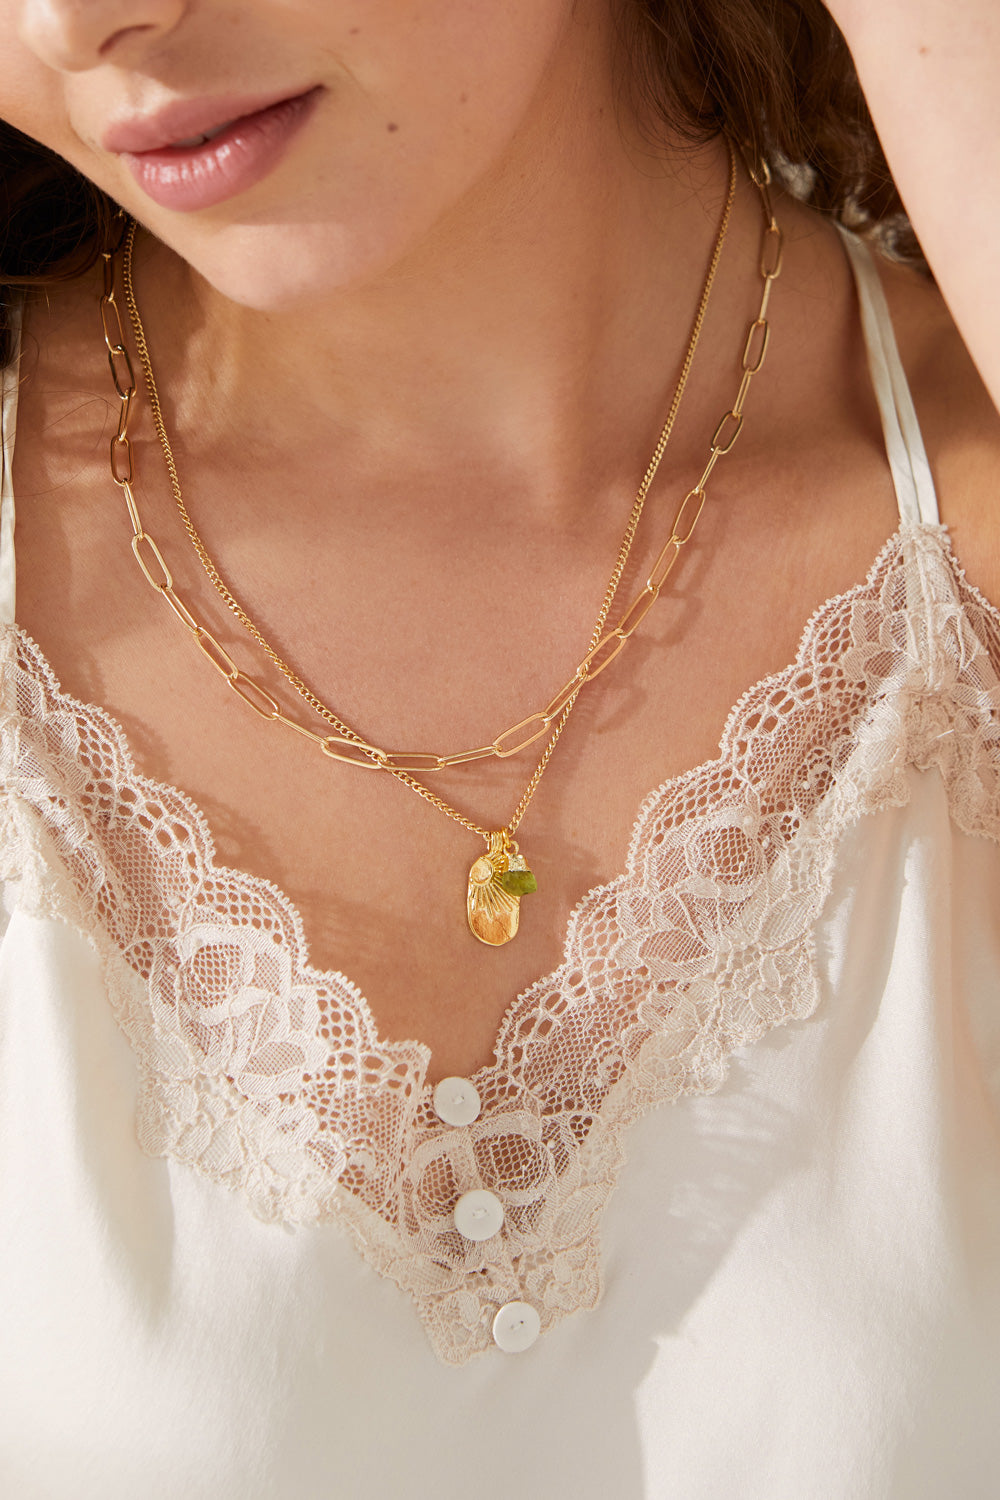 sola-peridot-gemstone-pendant-celestial-necklace-close-up